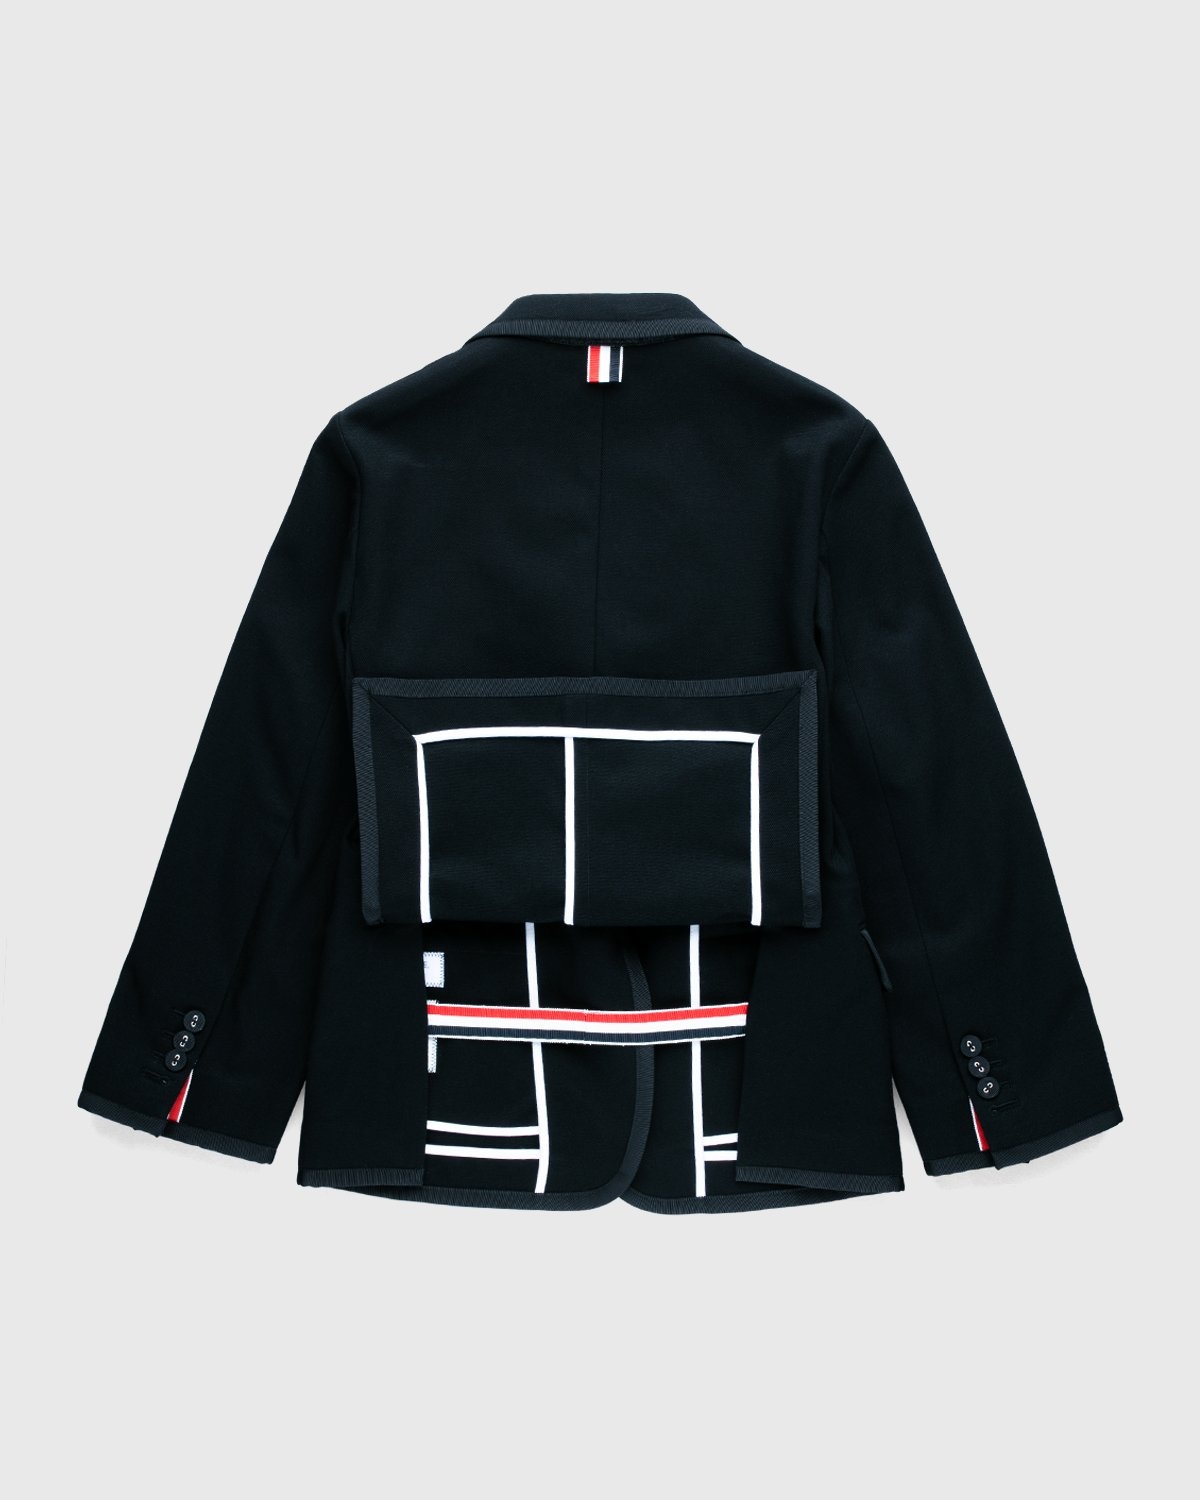 Thom Browne x Highsnobiety – Women’s Deconstructed Sport Jacket Black - Blazers - Black - Image 6